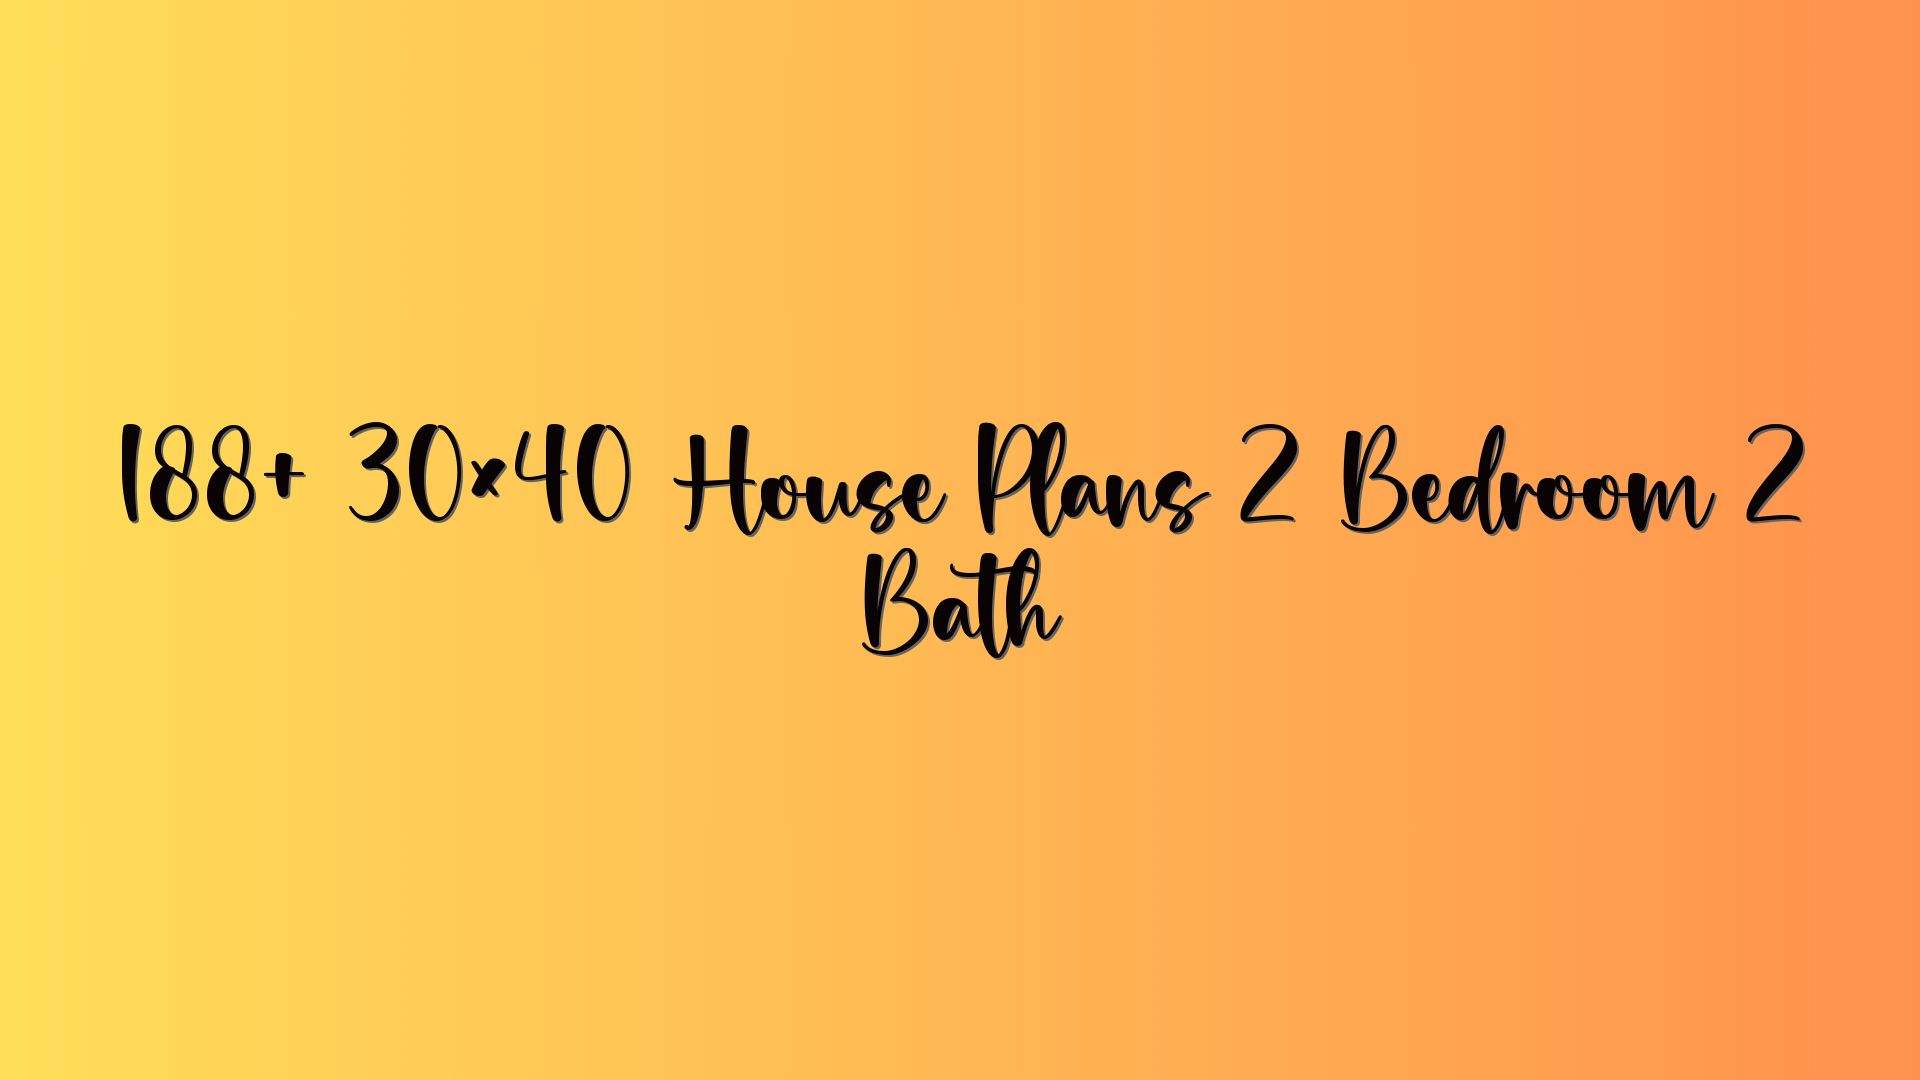 188+ 30×40 House Plans 2 Bedroom 2 Bath